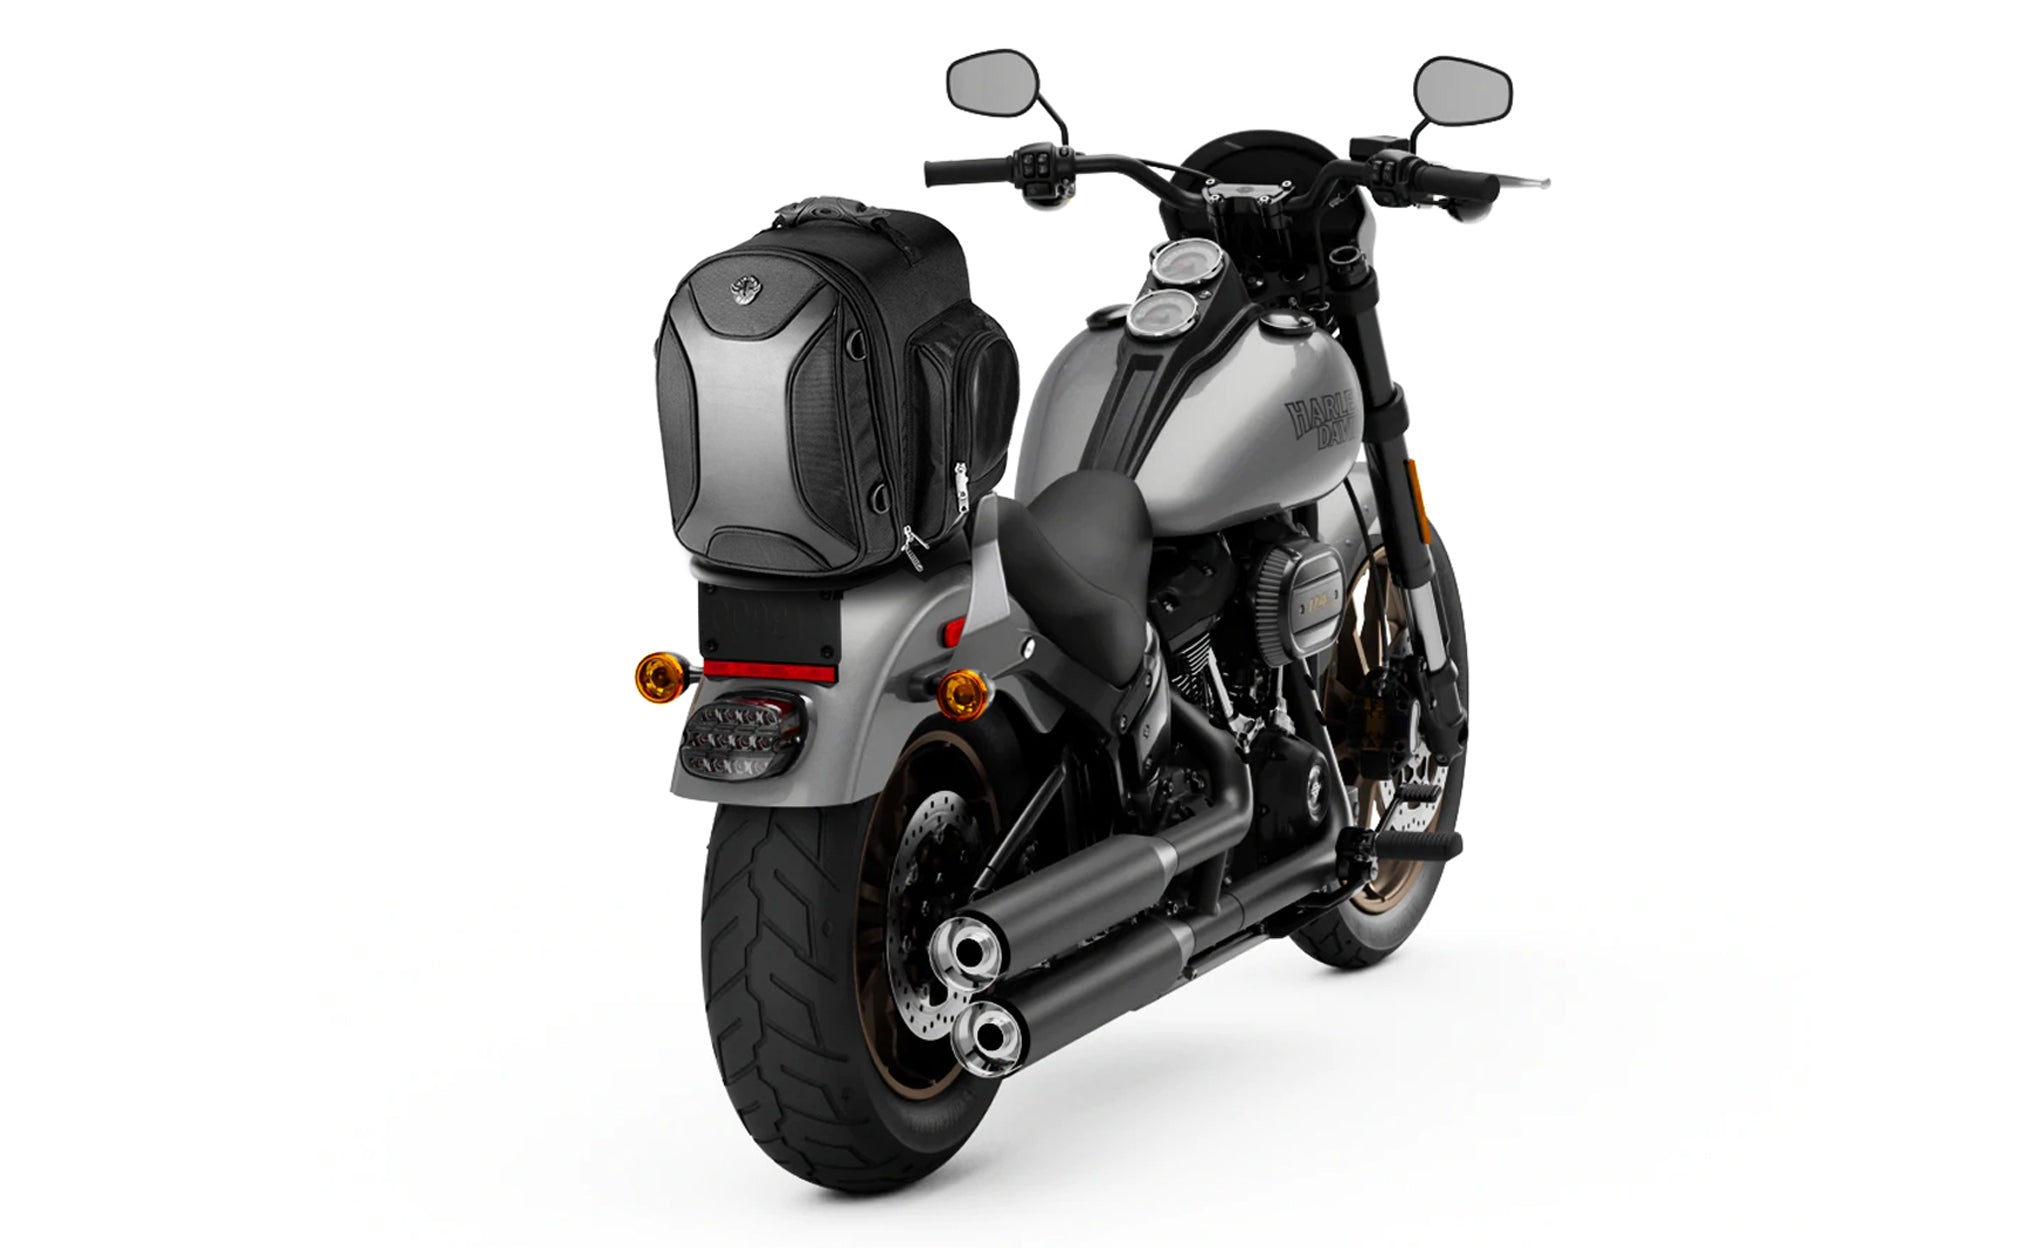 Viking Dagr Small Motorcycle Sissy Bar Bag for Harley Davidson Bag on Bike View @expand